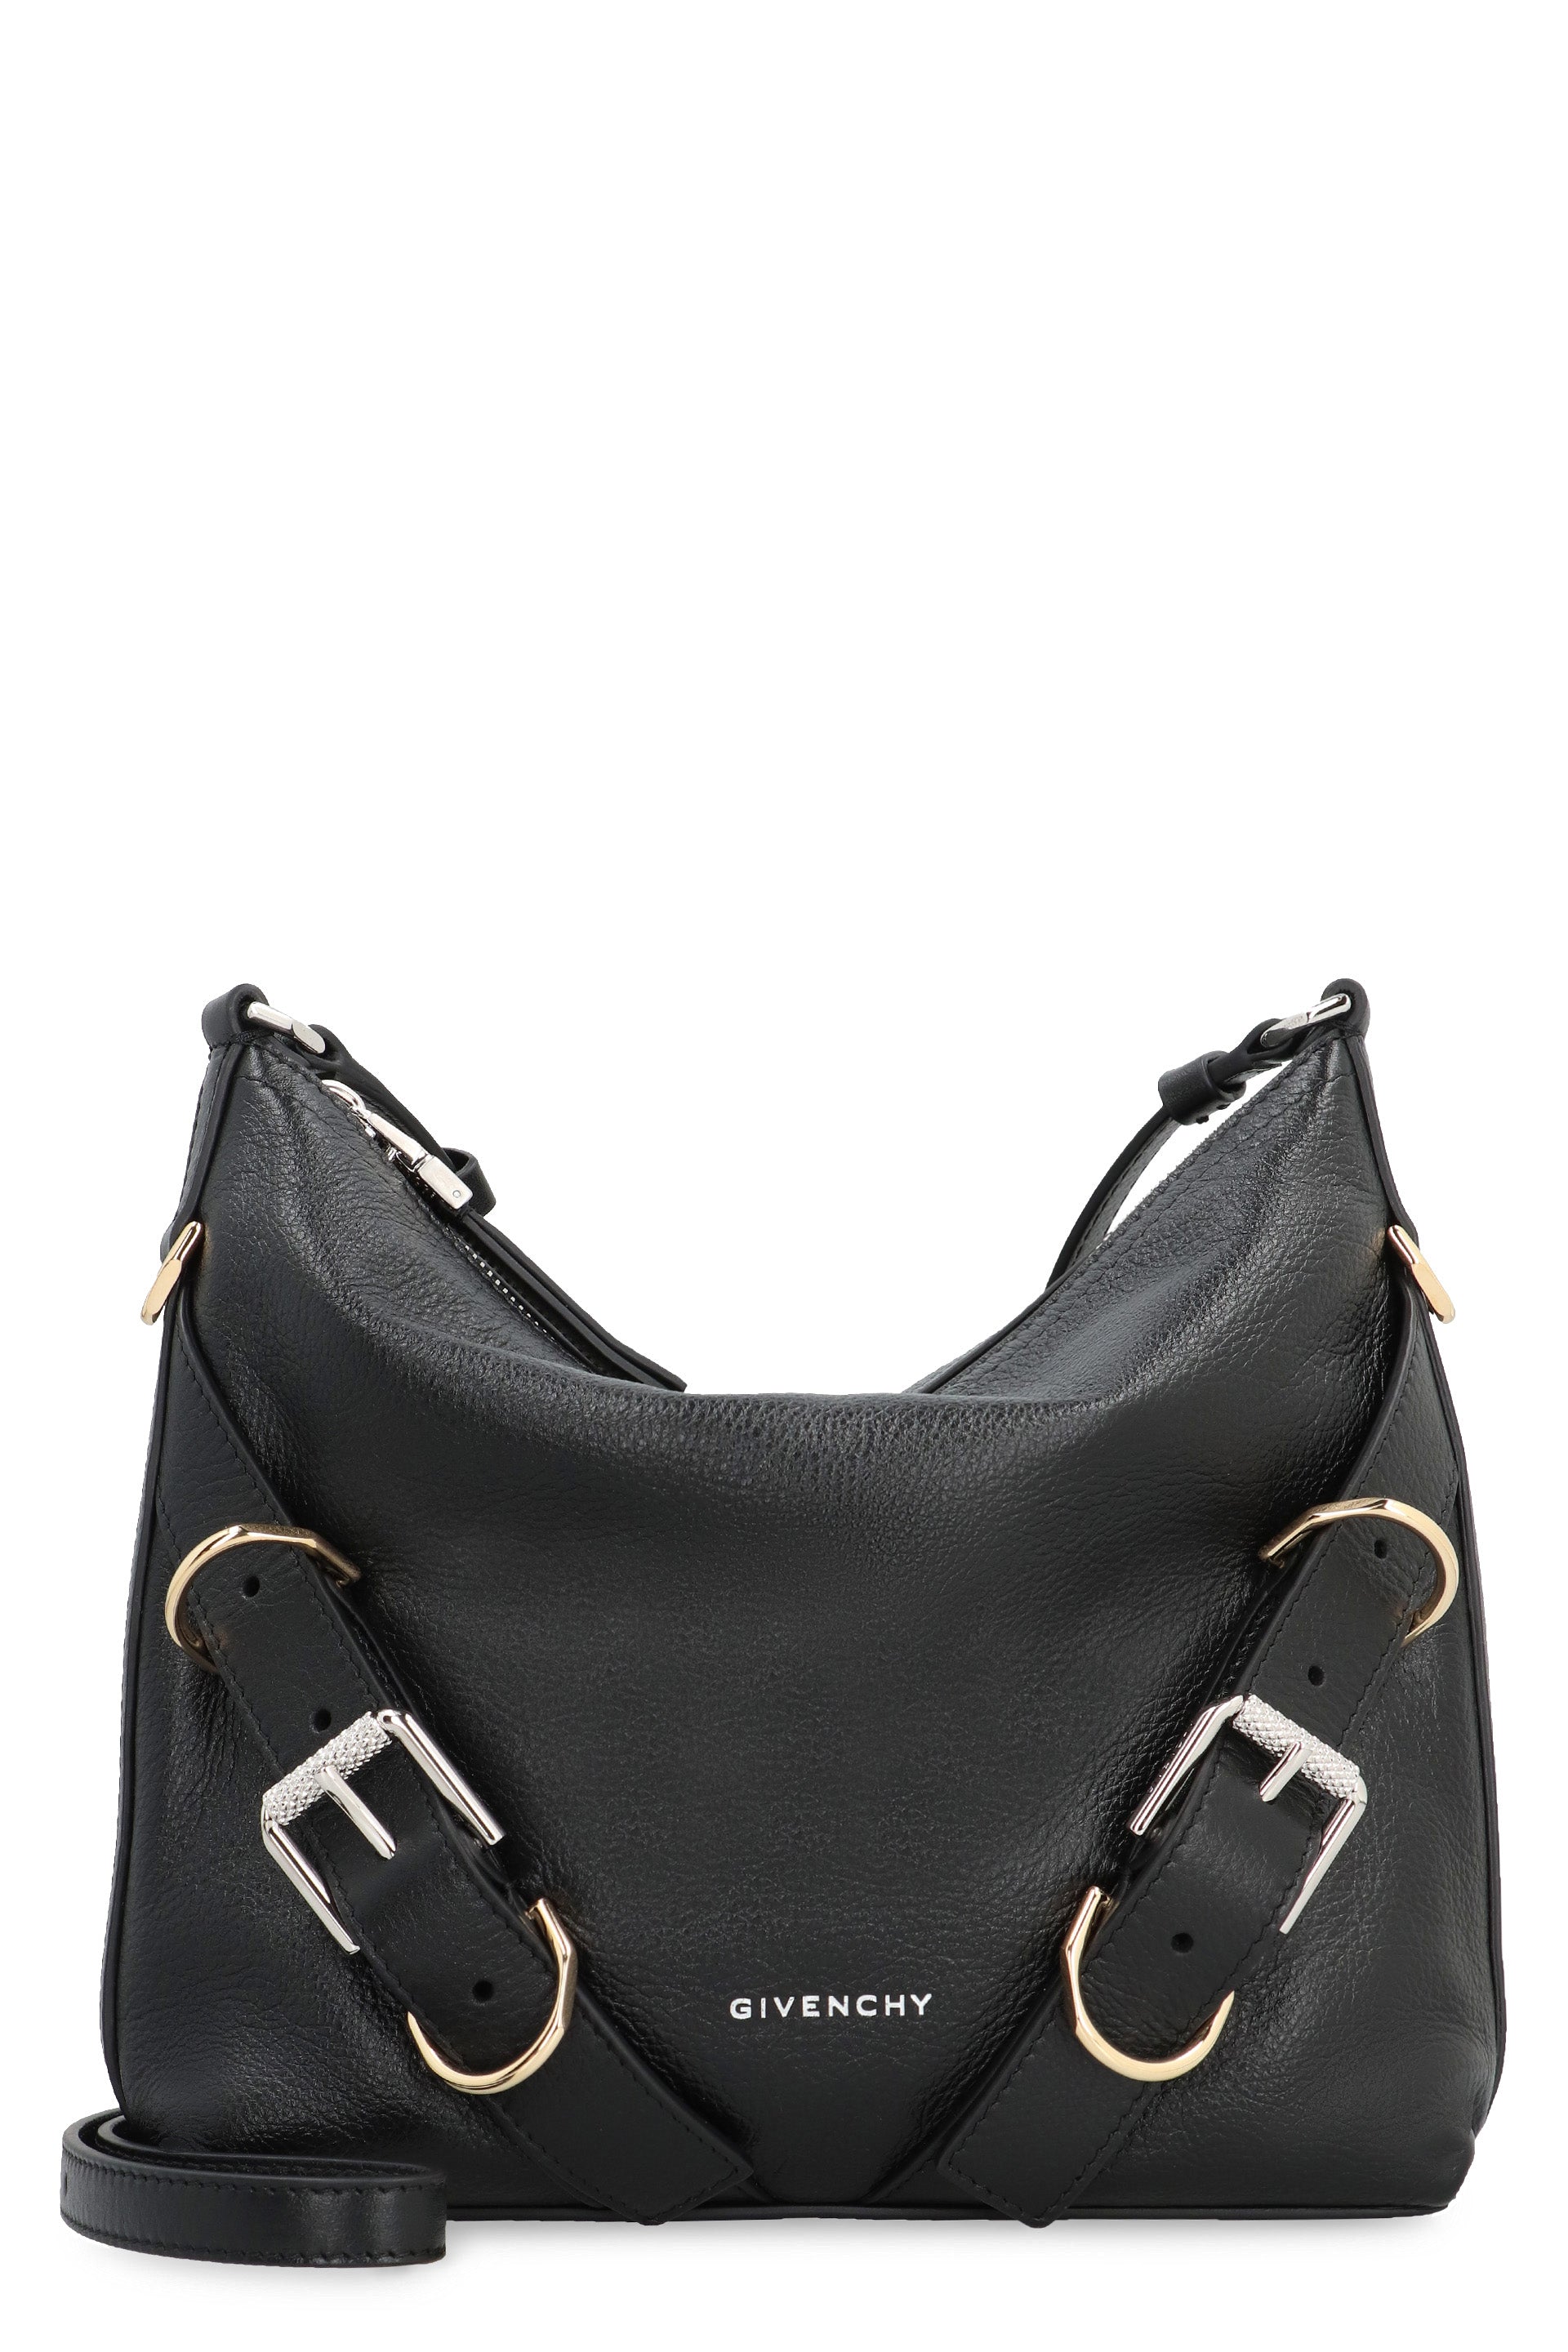 Shop Givenchy Black Leather Crossbody Handbag